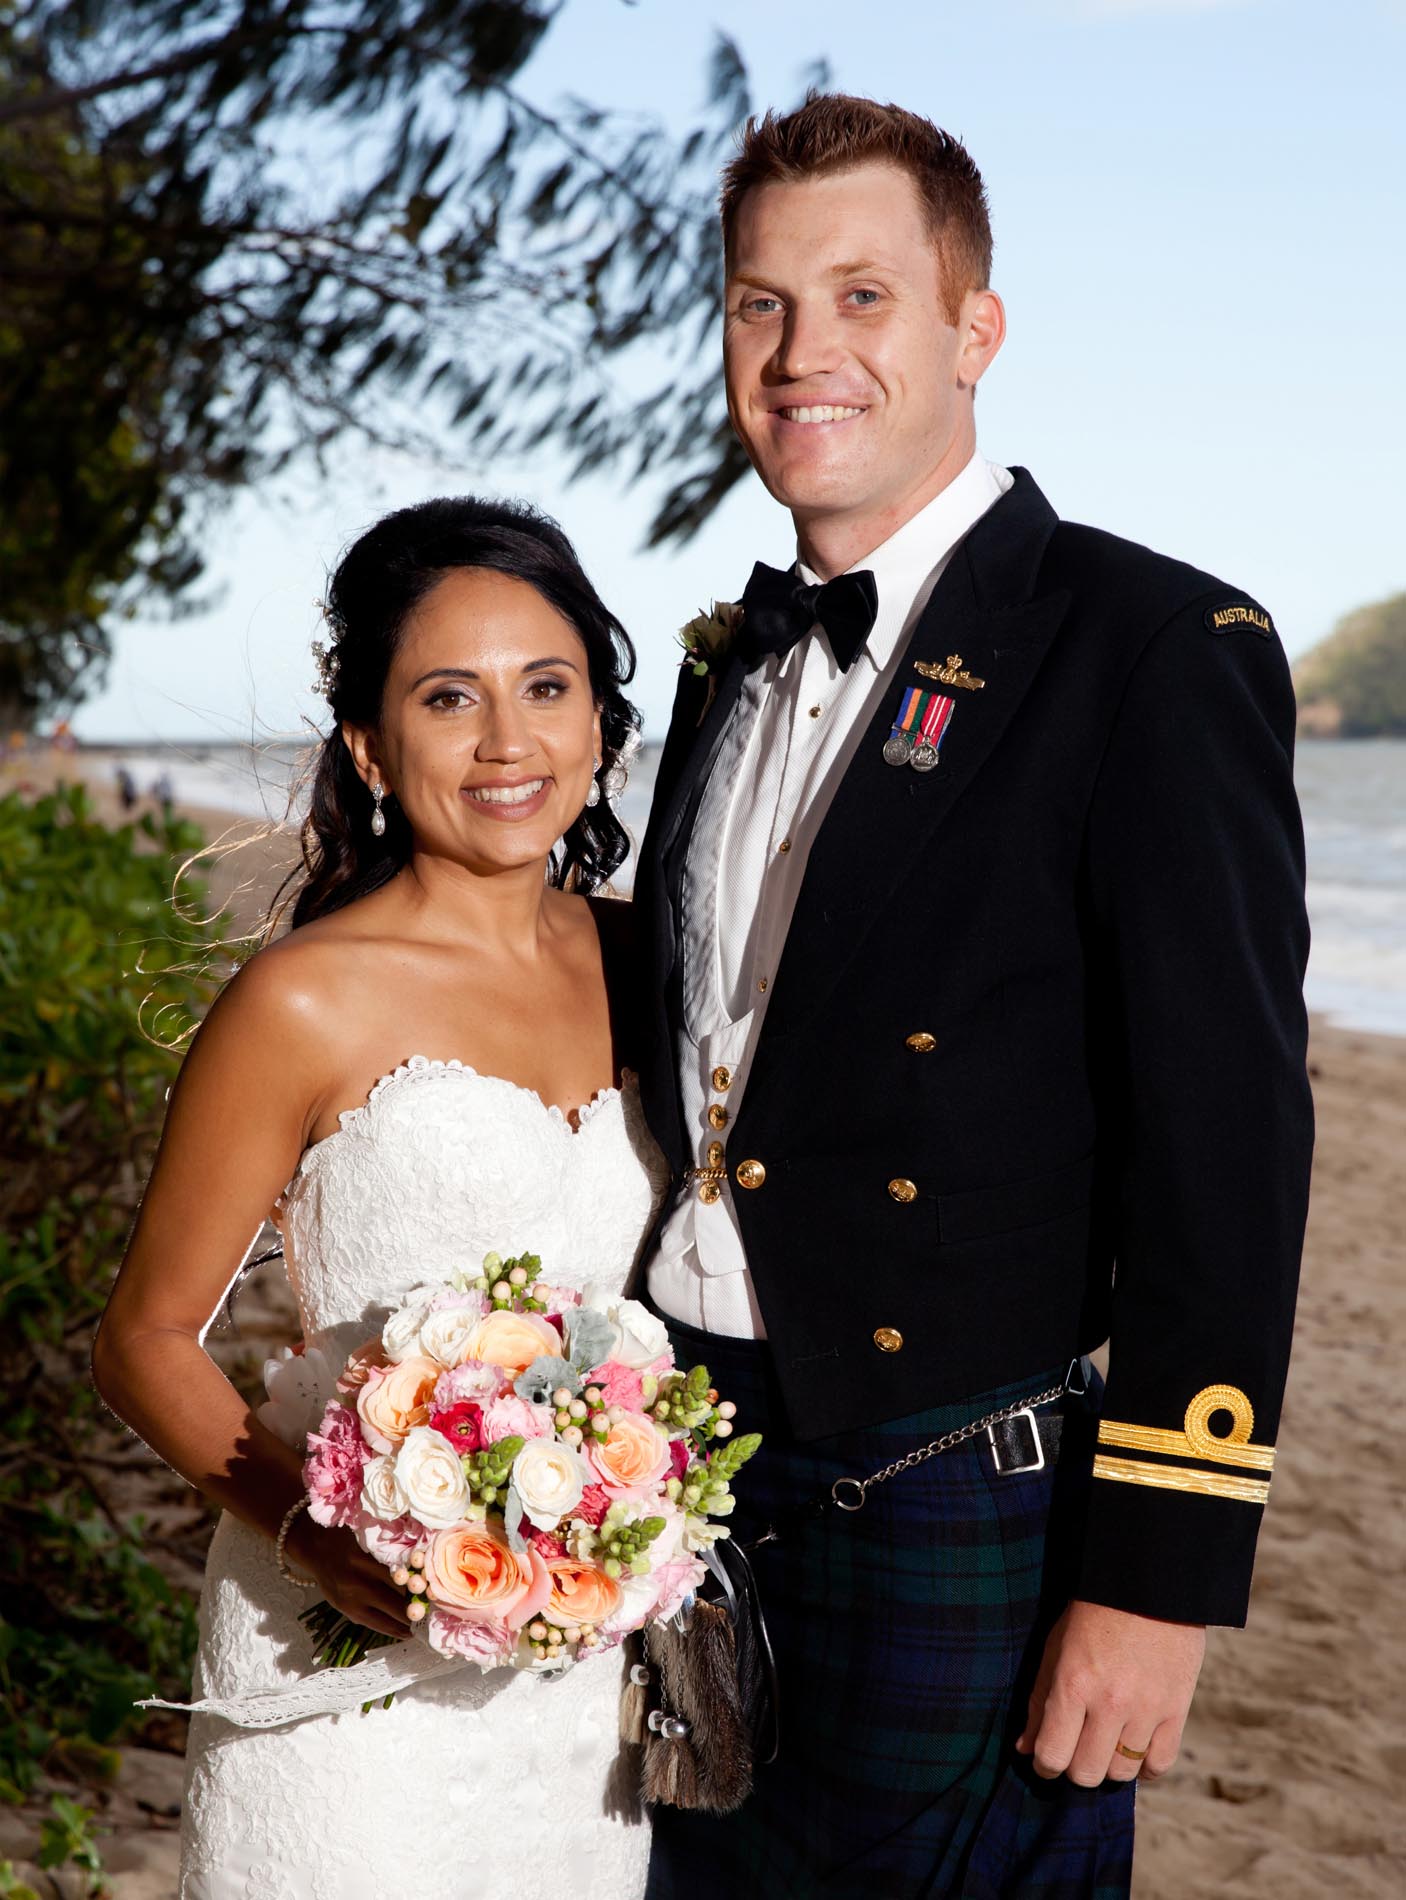 Palm Cove wedding Photographer captures beautiful wedding images at sarayi Palm Cove.